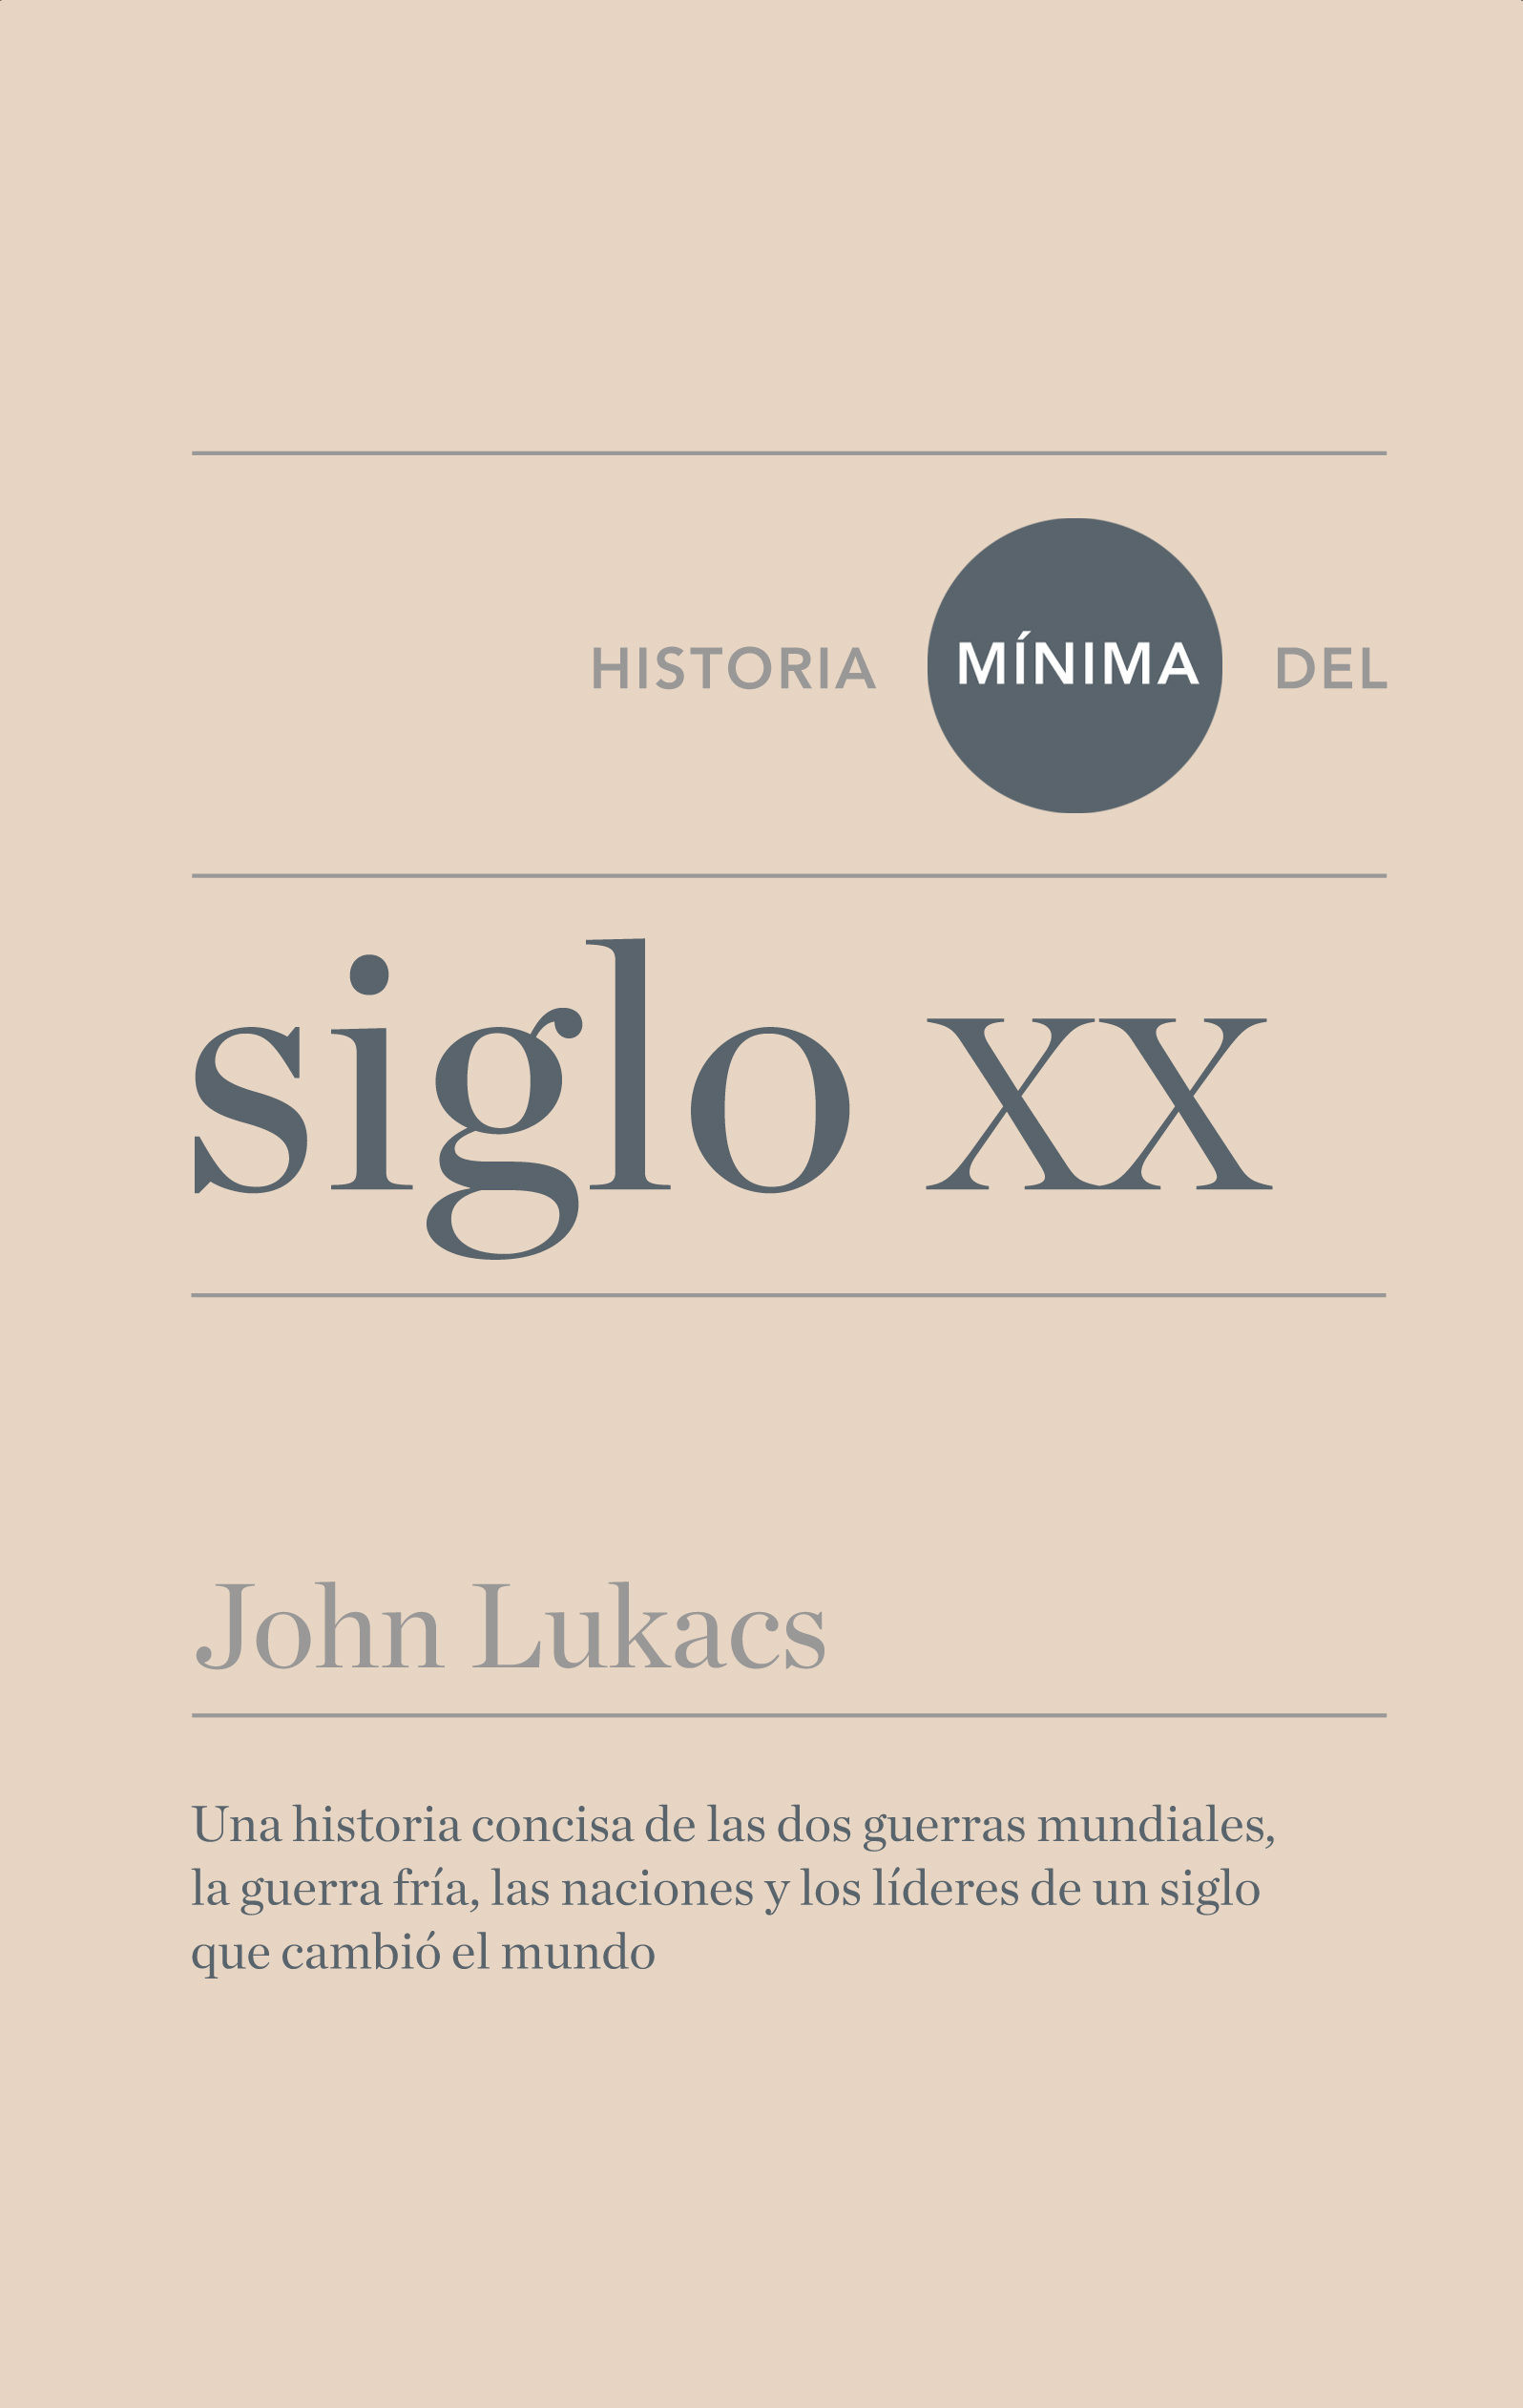 Imagen Historia mínima del siglo XX. John Lukacs 1